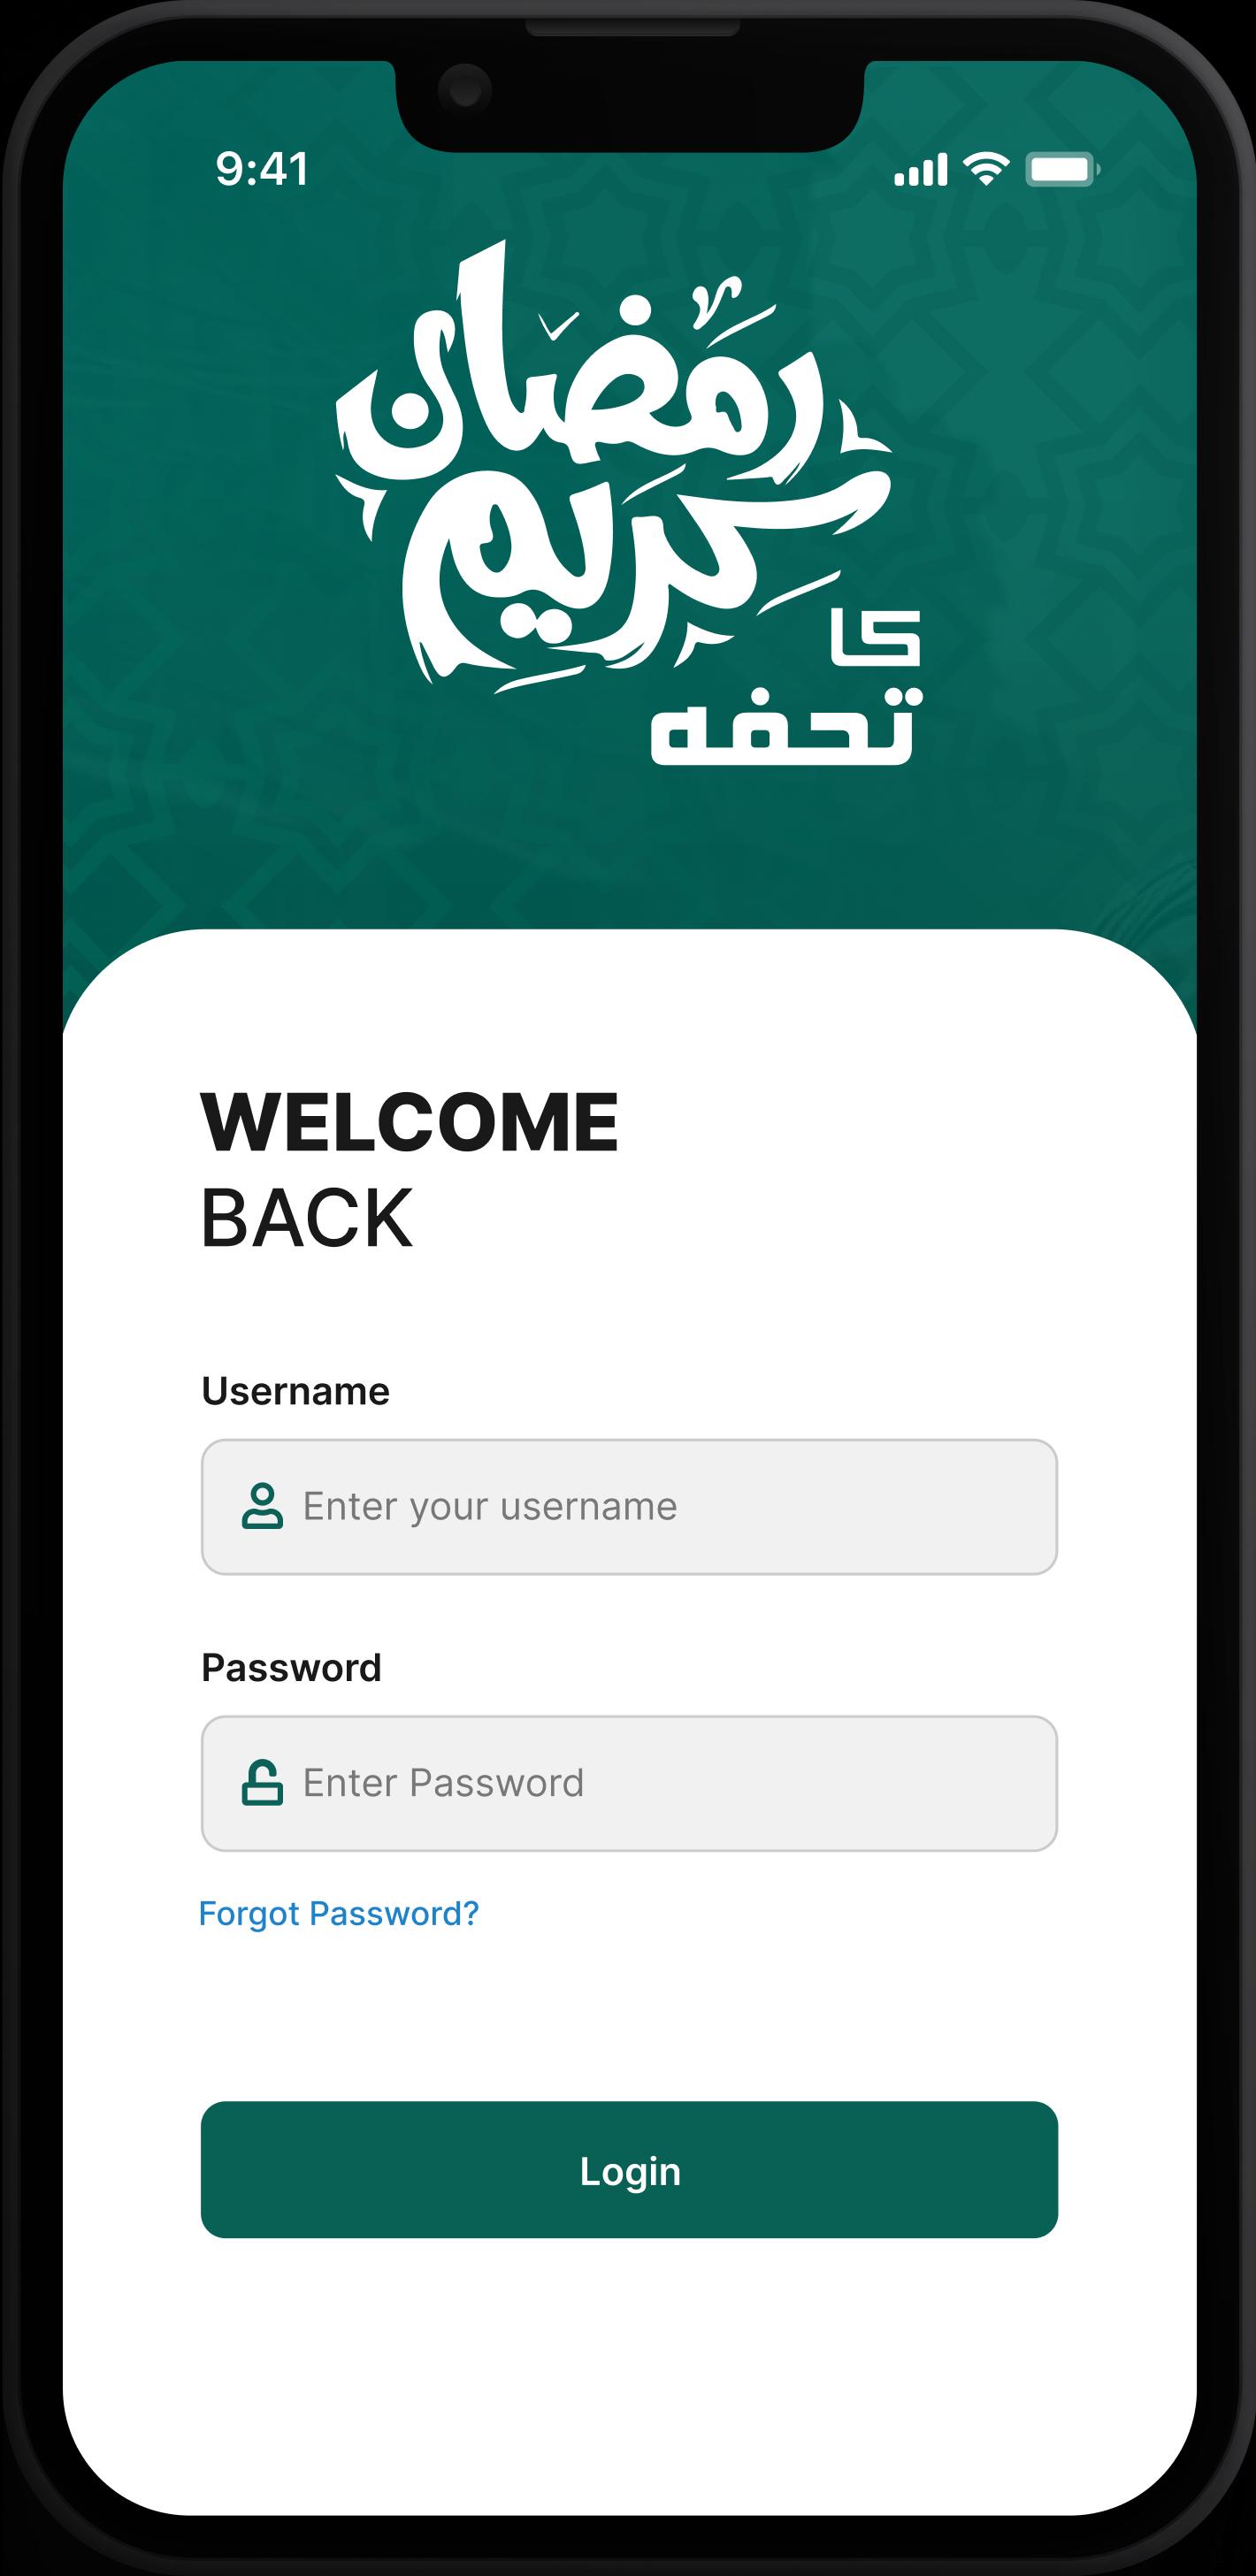 Nigehban Ramadan App Télécharger APK